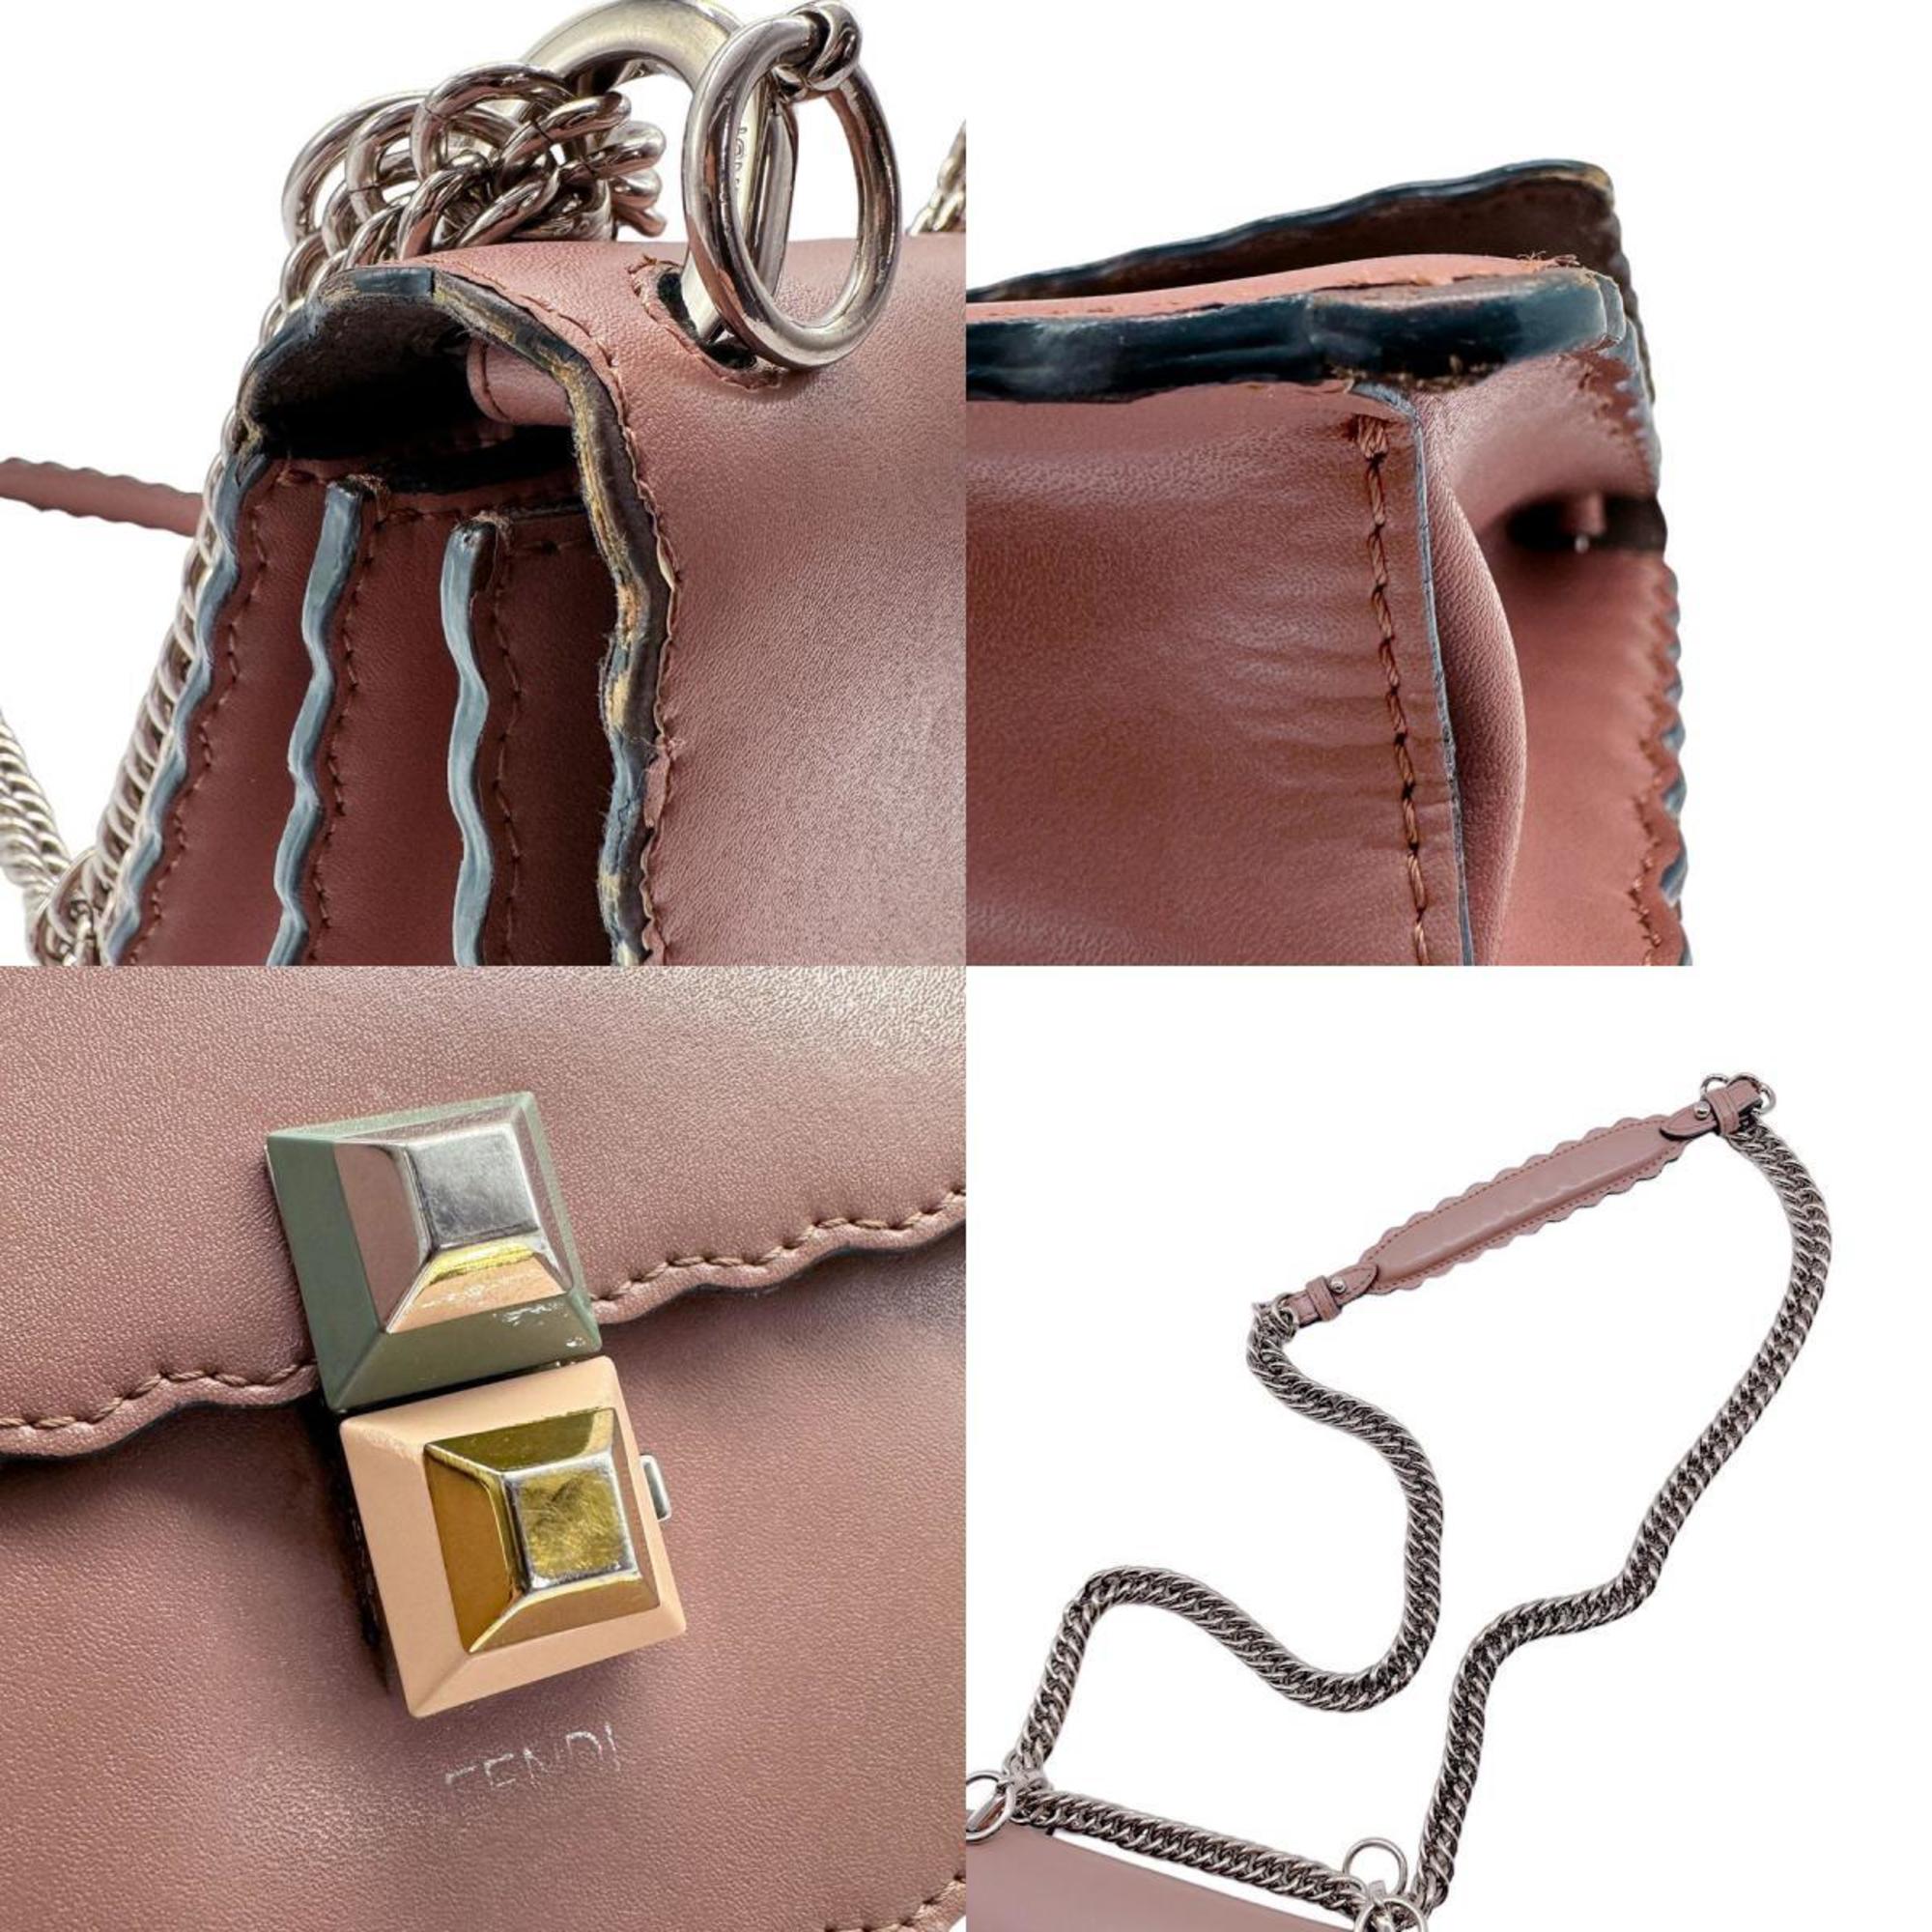 FENDI Shoulder Bag Leather Dusty Pink Women's 8M0381-OZC z0516